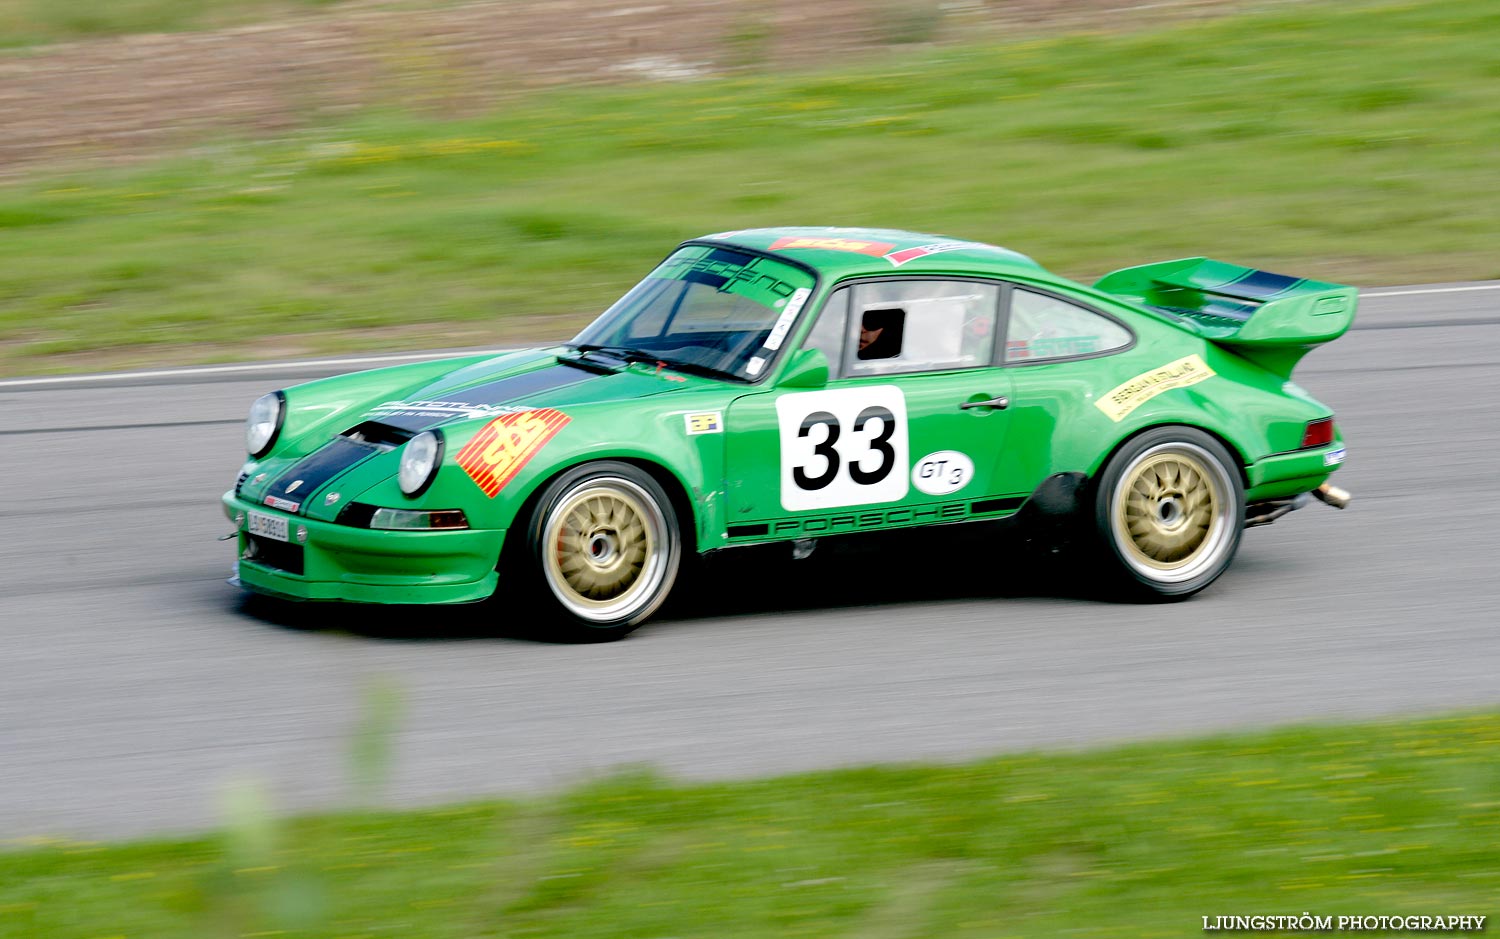 SSK Raceweek,mix,Kinnekulle Ring,Götene,Sverige,Motorsport,,2009,107518